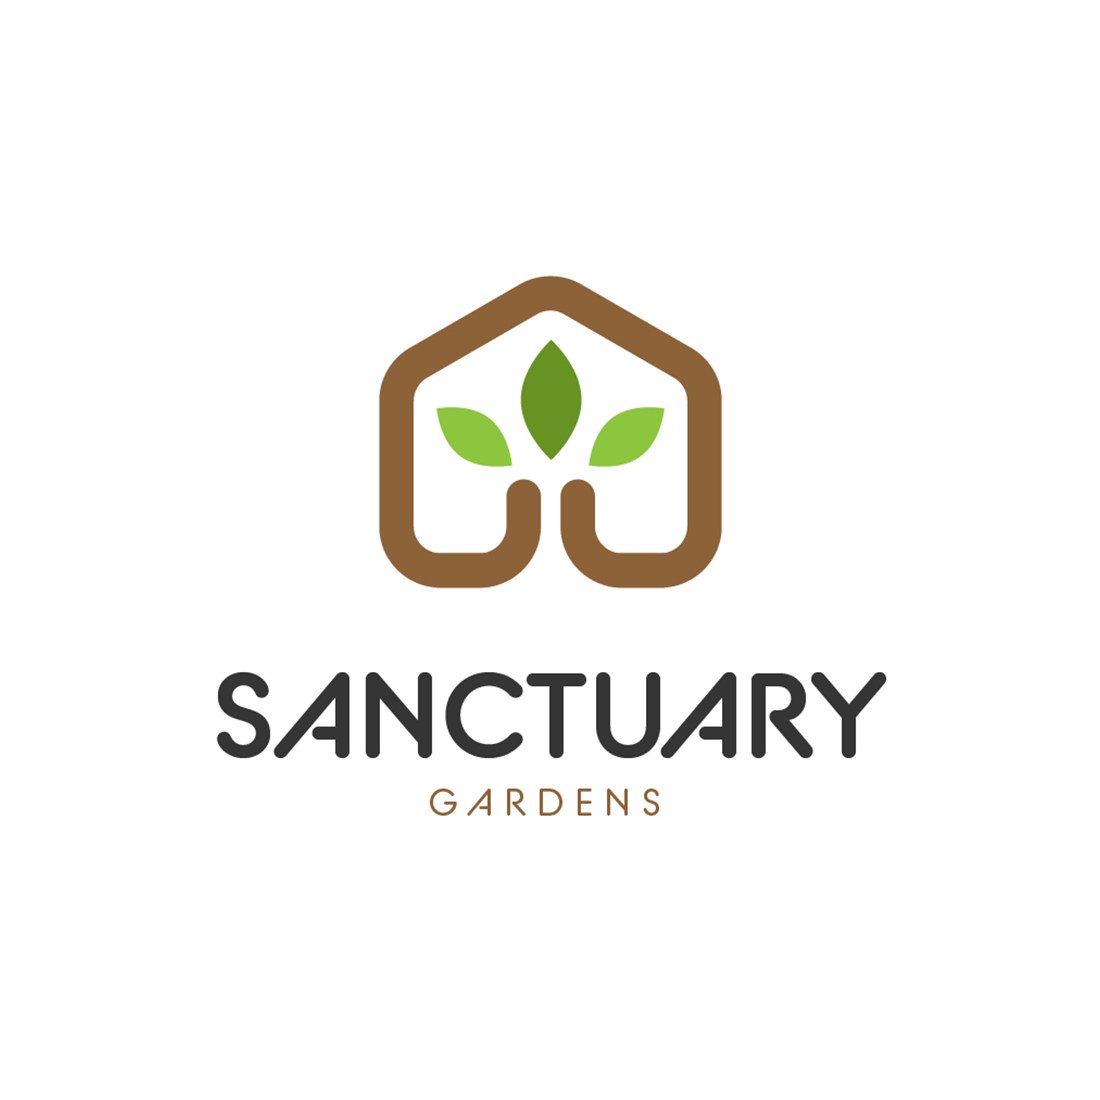 Sanctuary Gardens image on the light background.